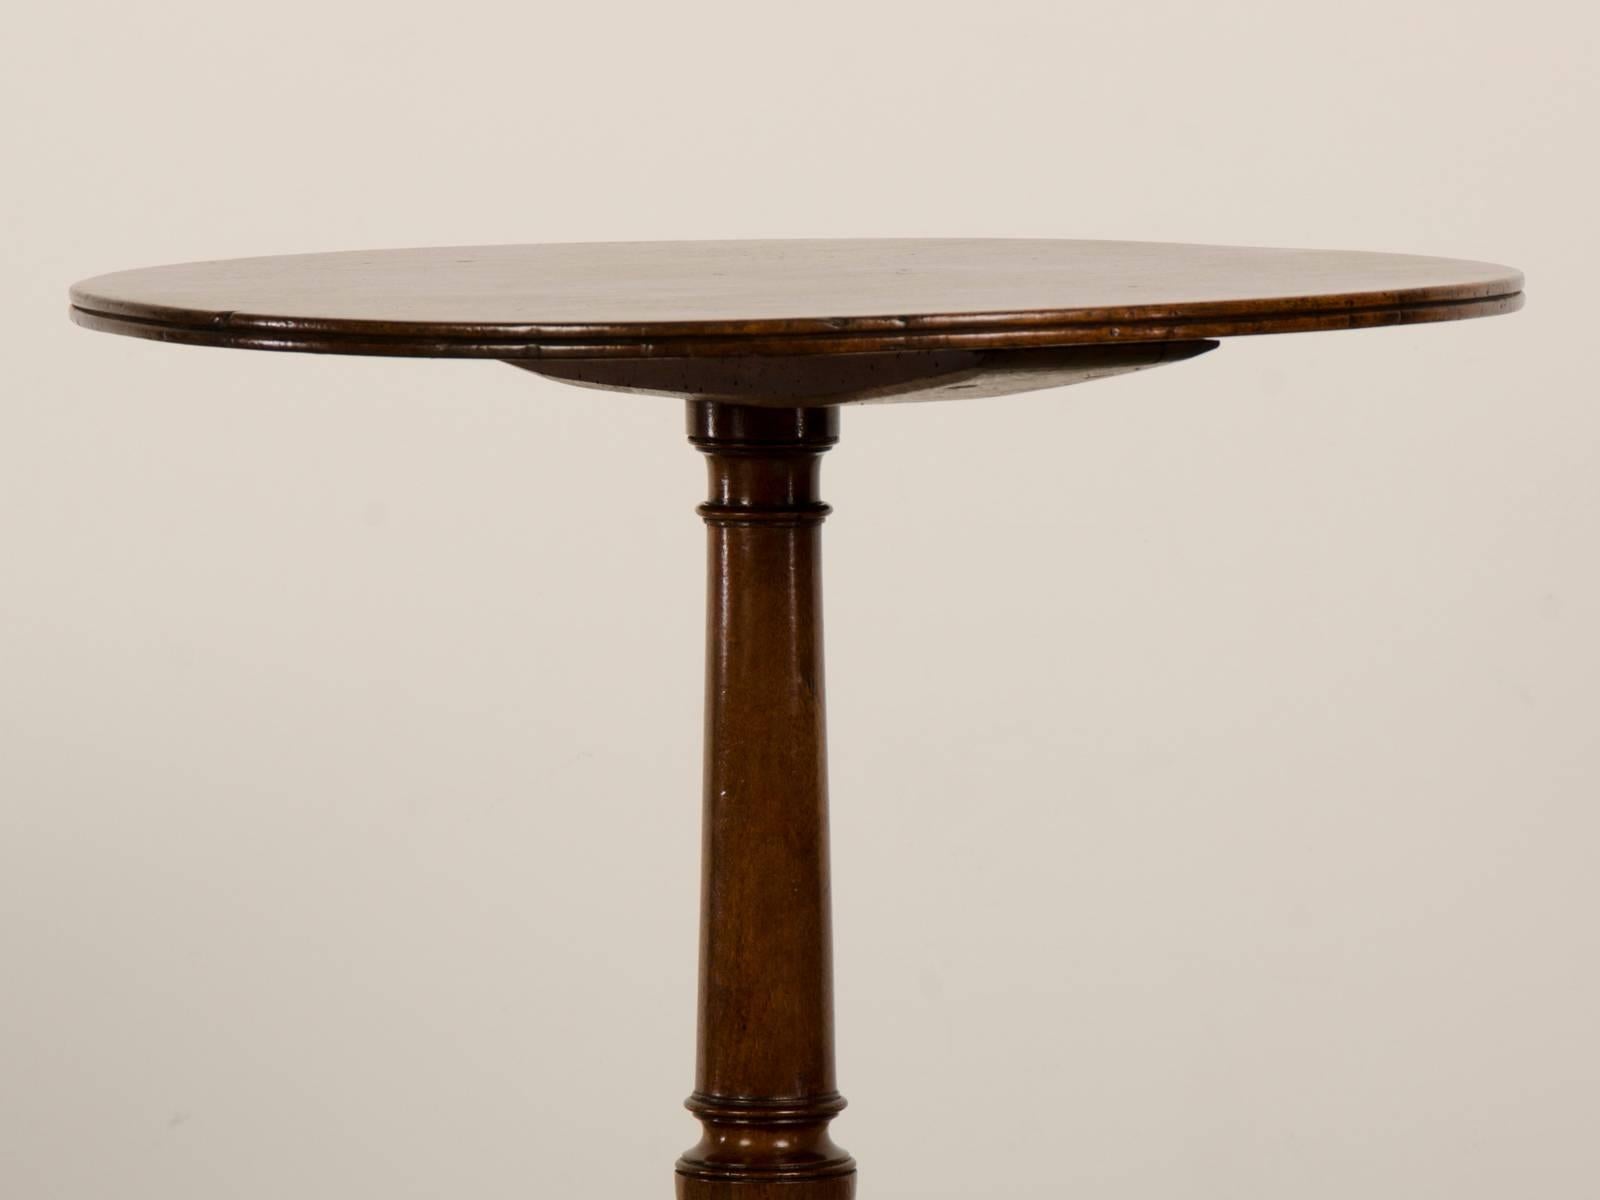 Hand-Carved Antique English Regency Sheraton Style Mahogany Table, circa 1820